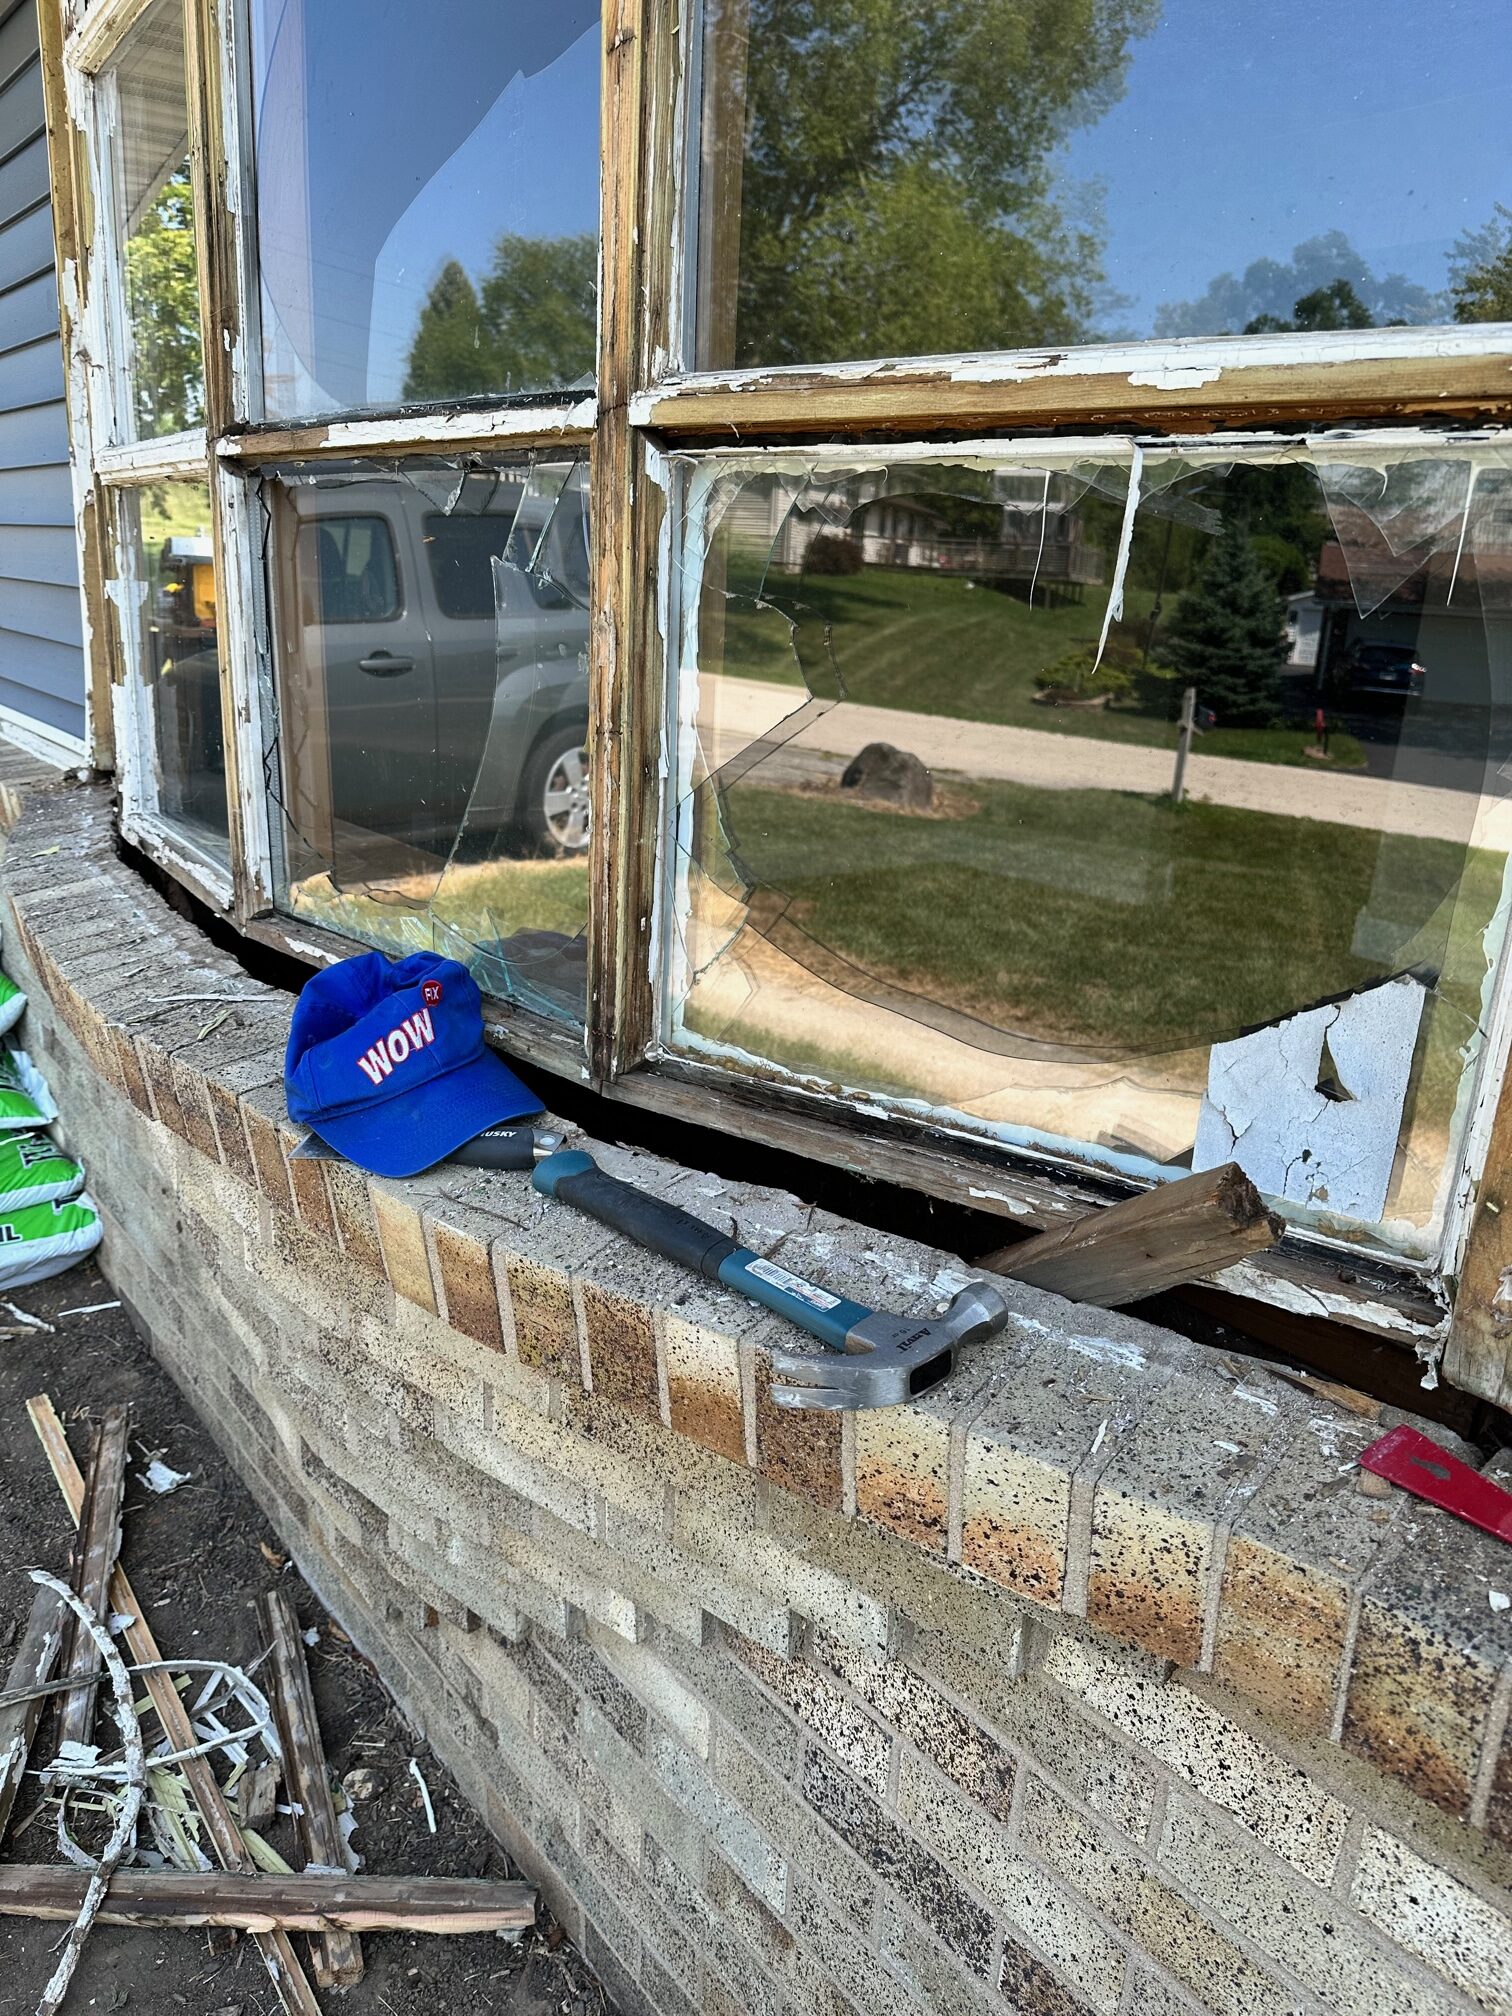 Window repair in Weddington NC